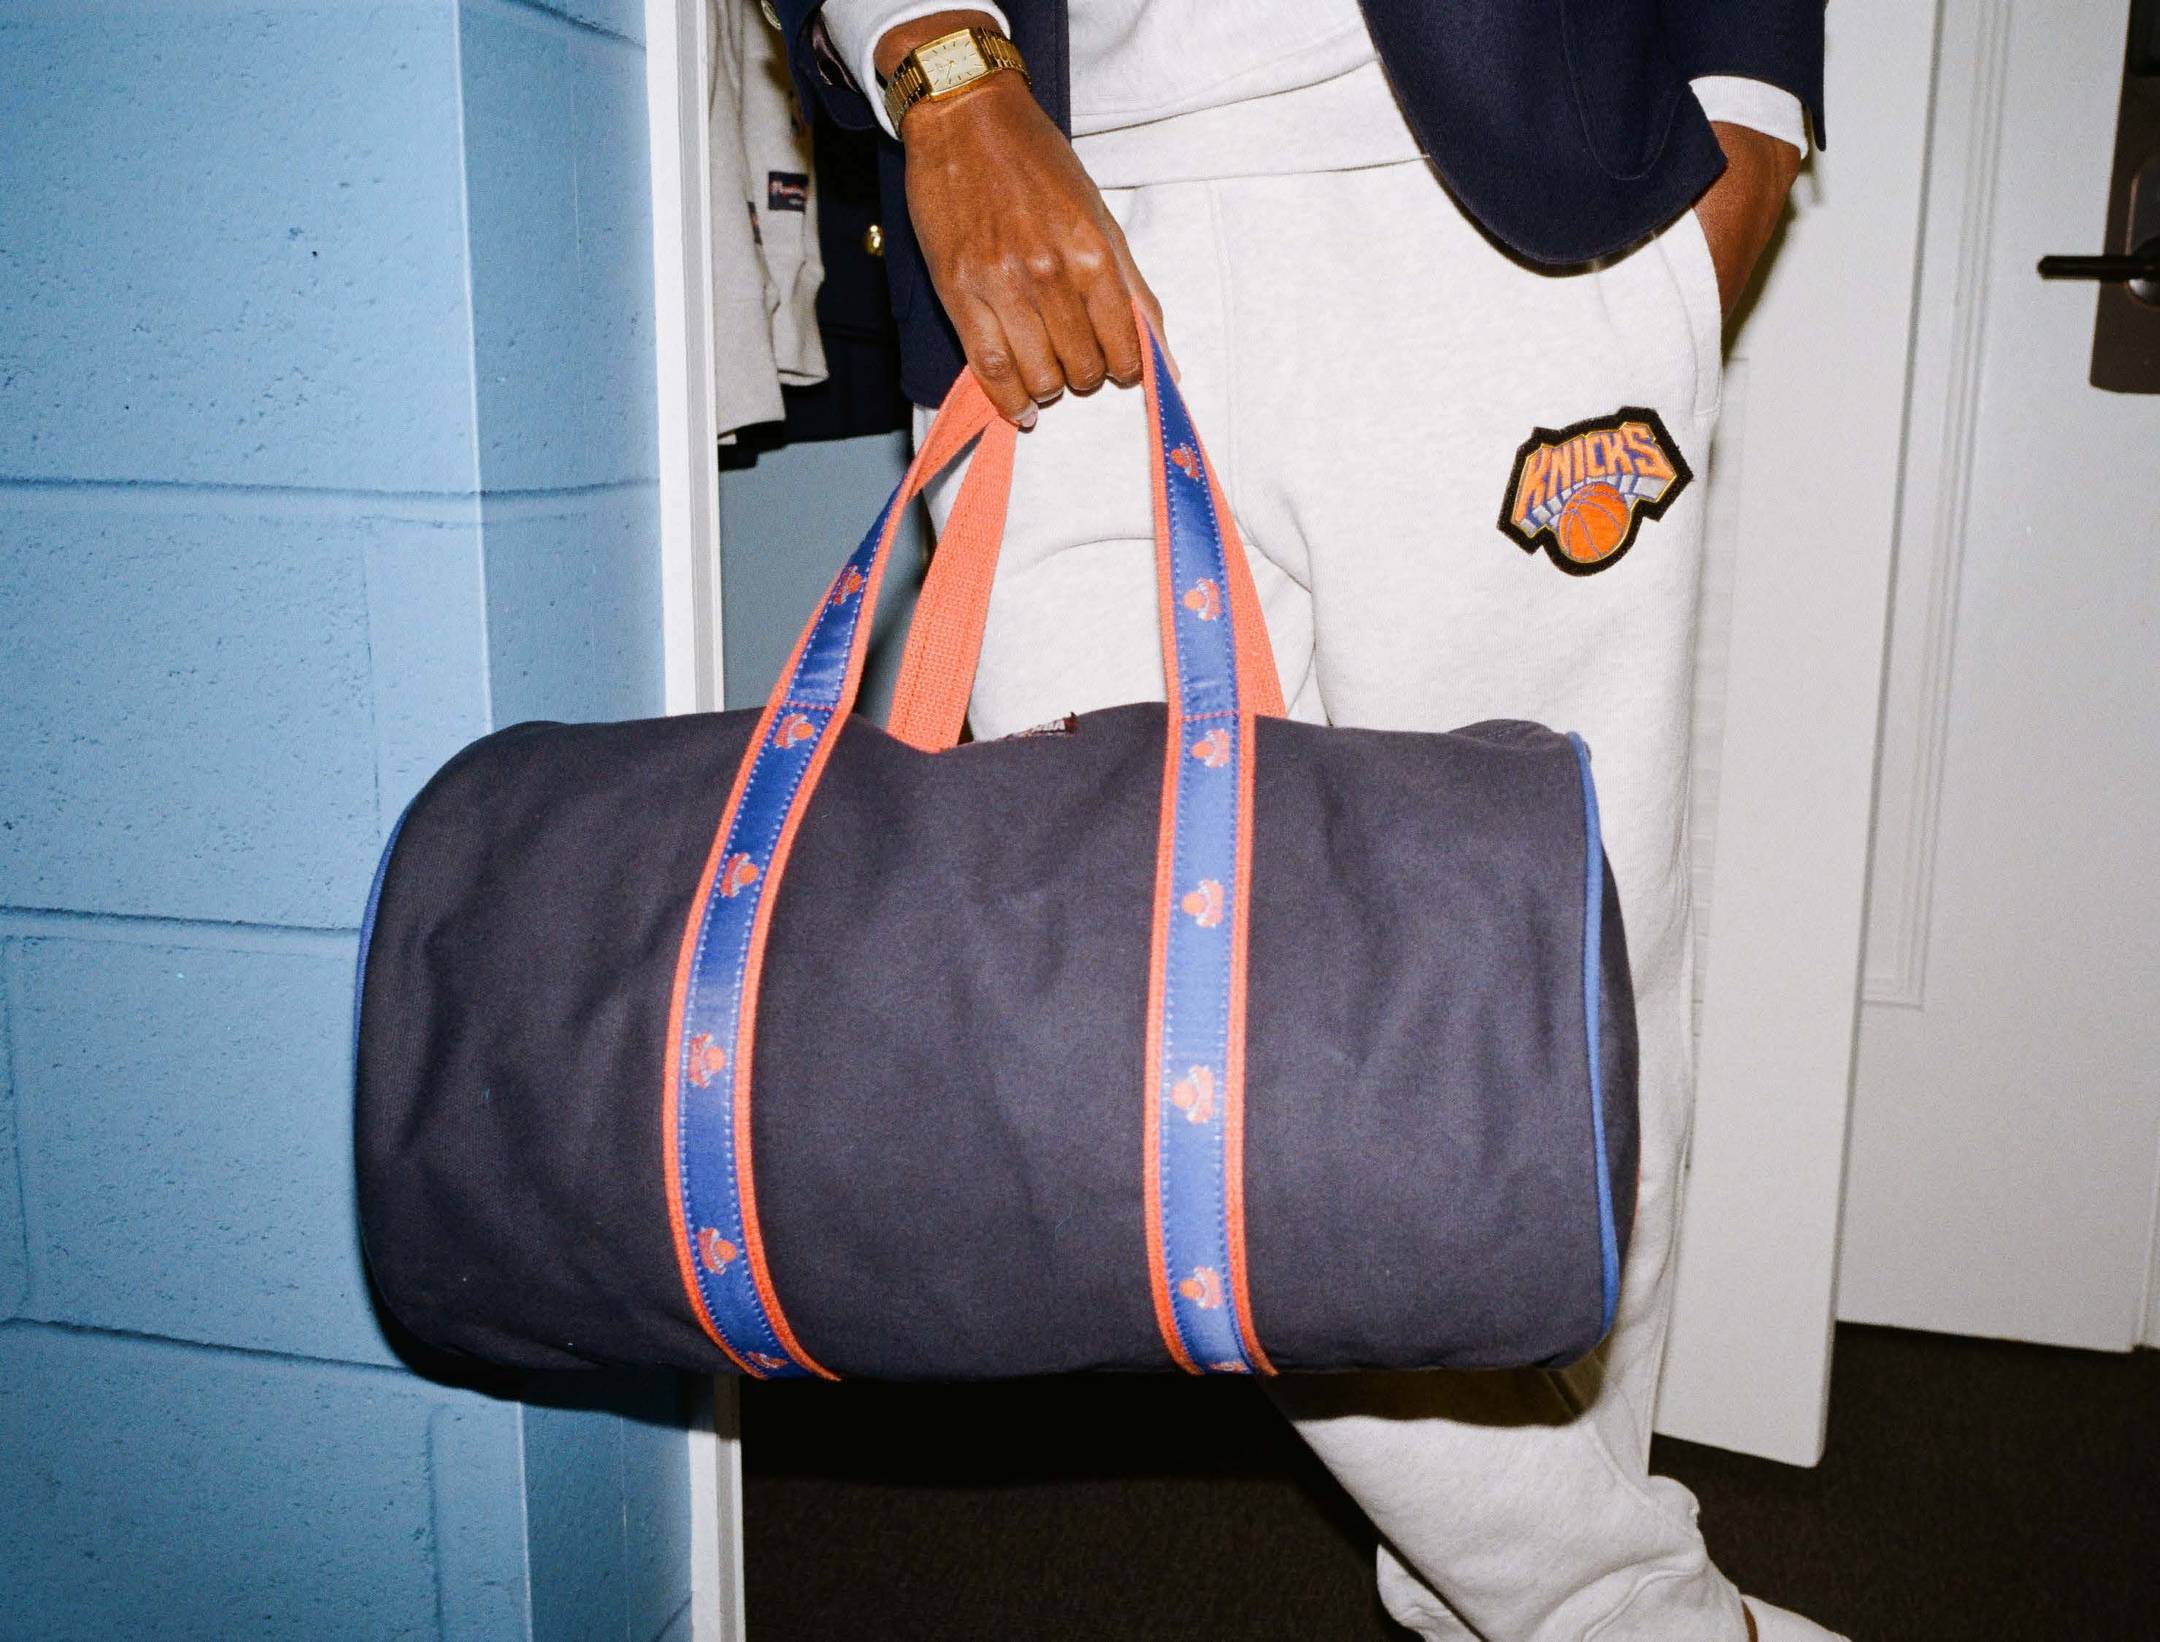 Model holding the New York Knicks Banker Bag in a dorm room.